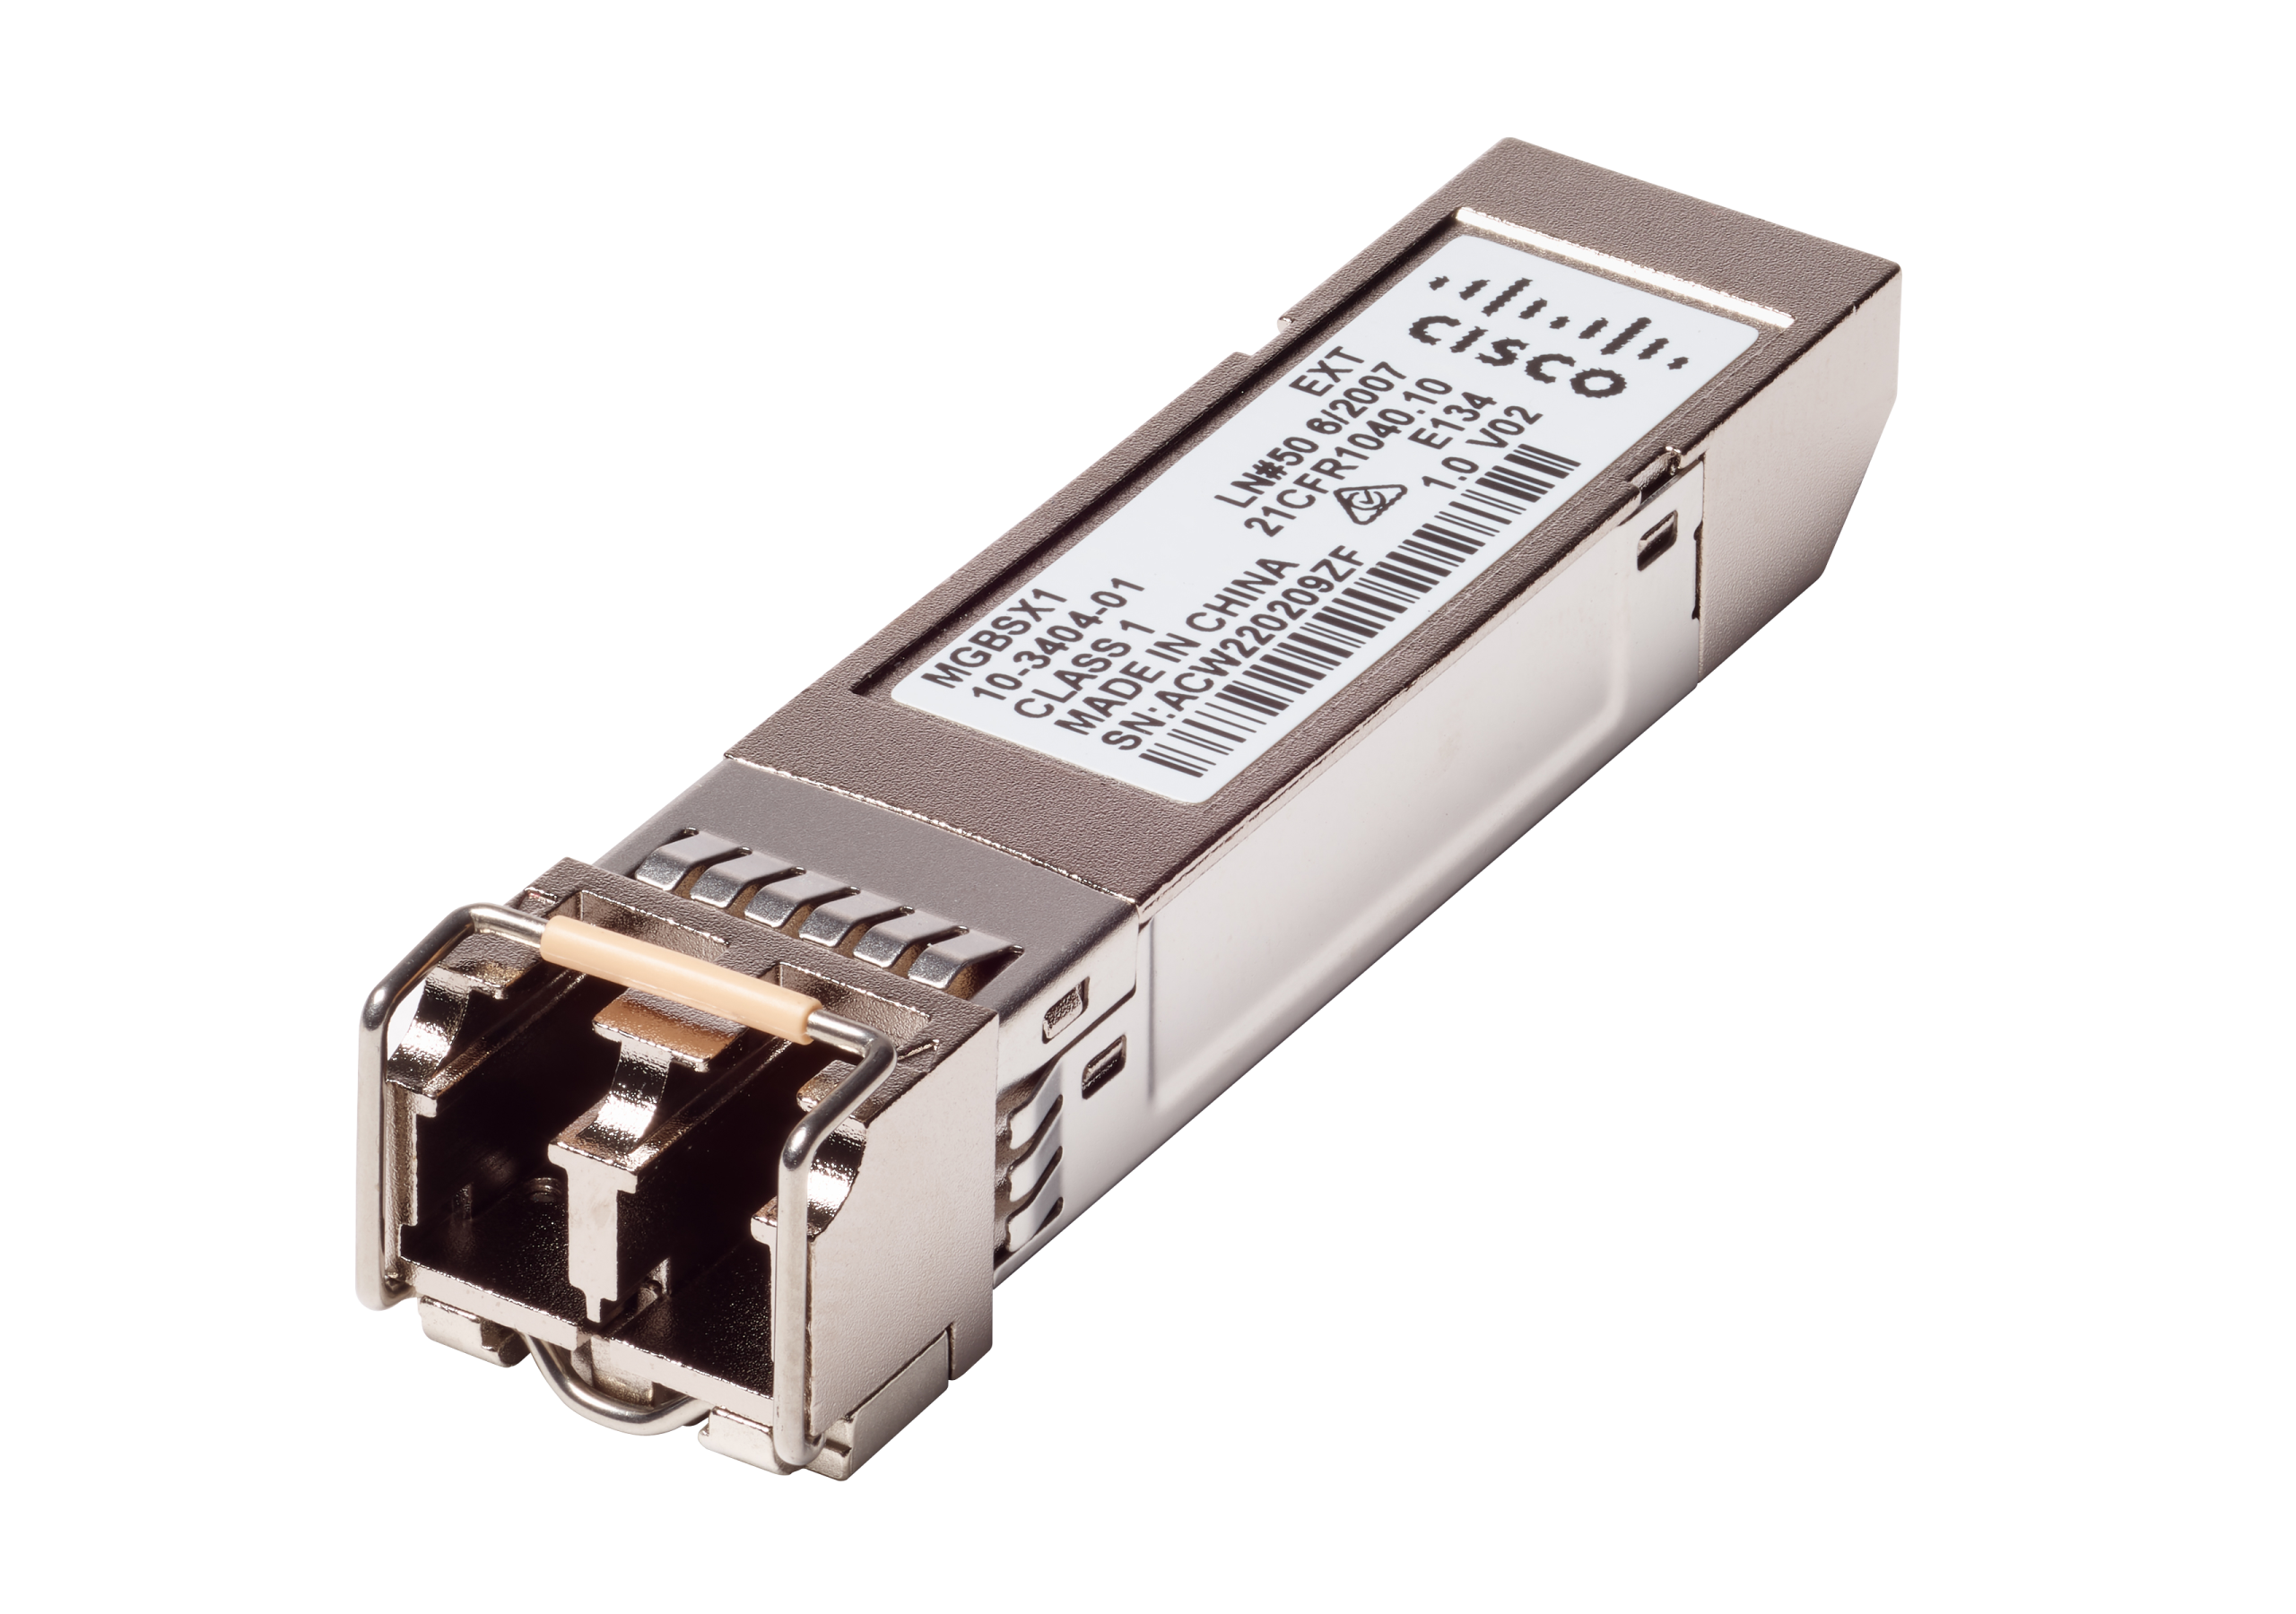 Cisco MGBSX1 Gigabit Ethernet SX Mini-GBIC SFP Transceiver